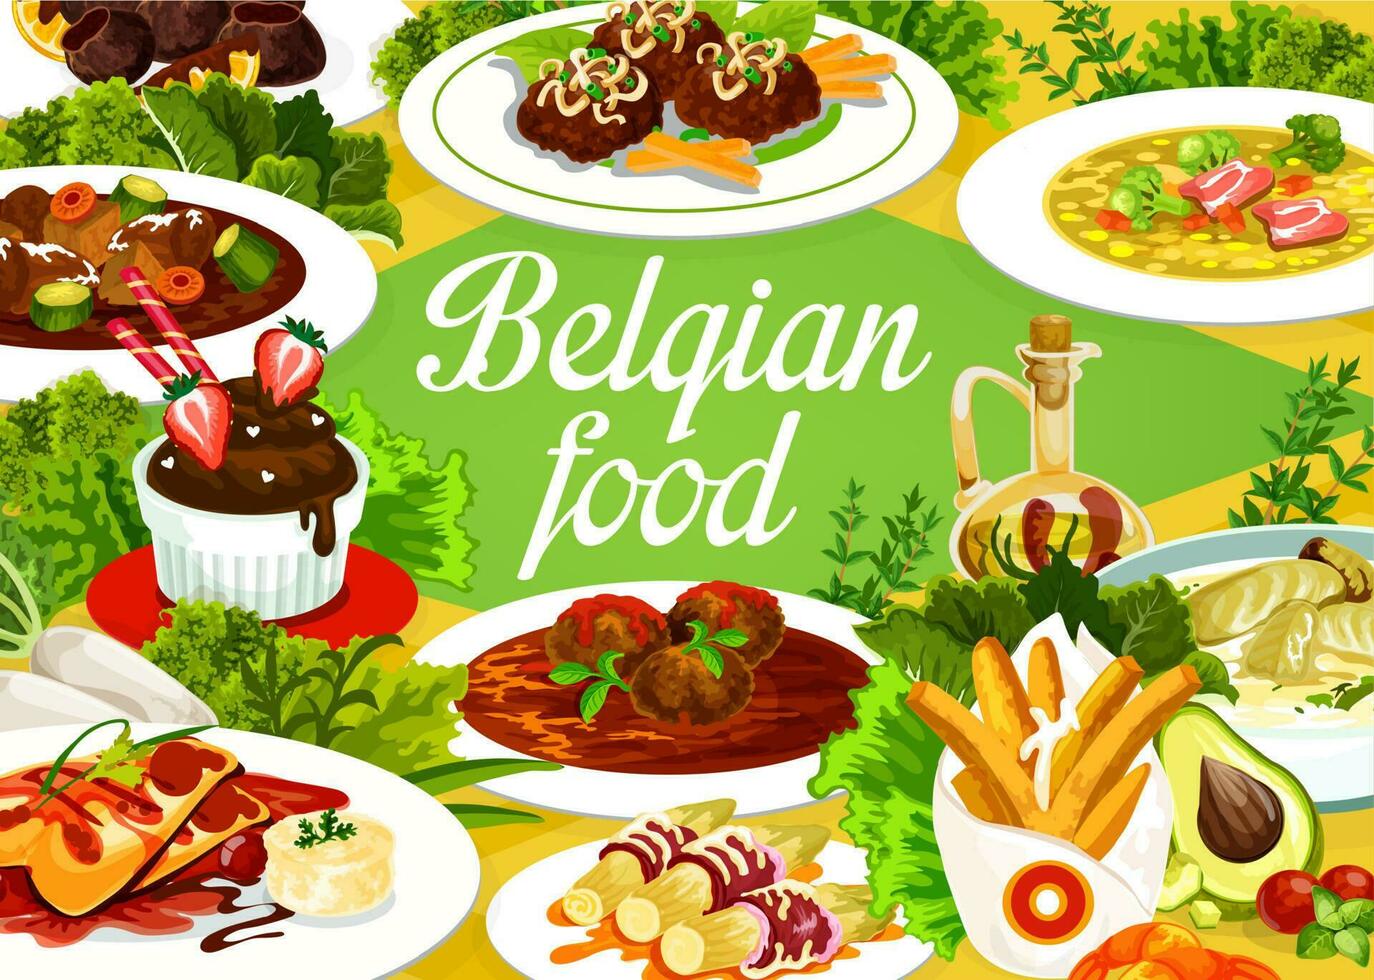 Belgian cuisine food menu, restaurant meal dishes vector